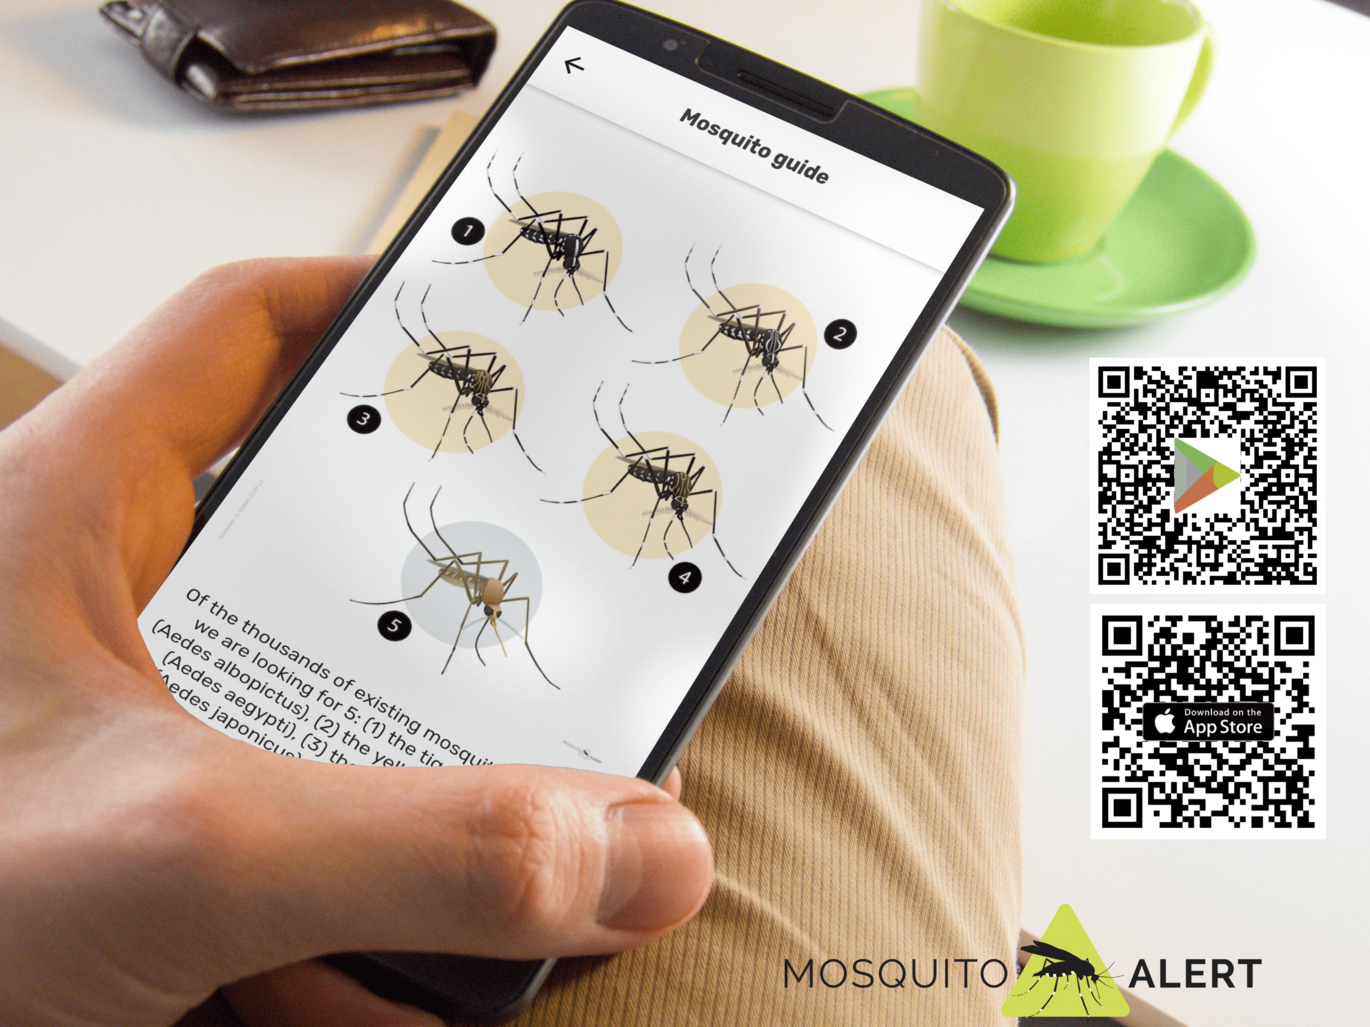 Image from mosquitoalert.com